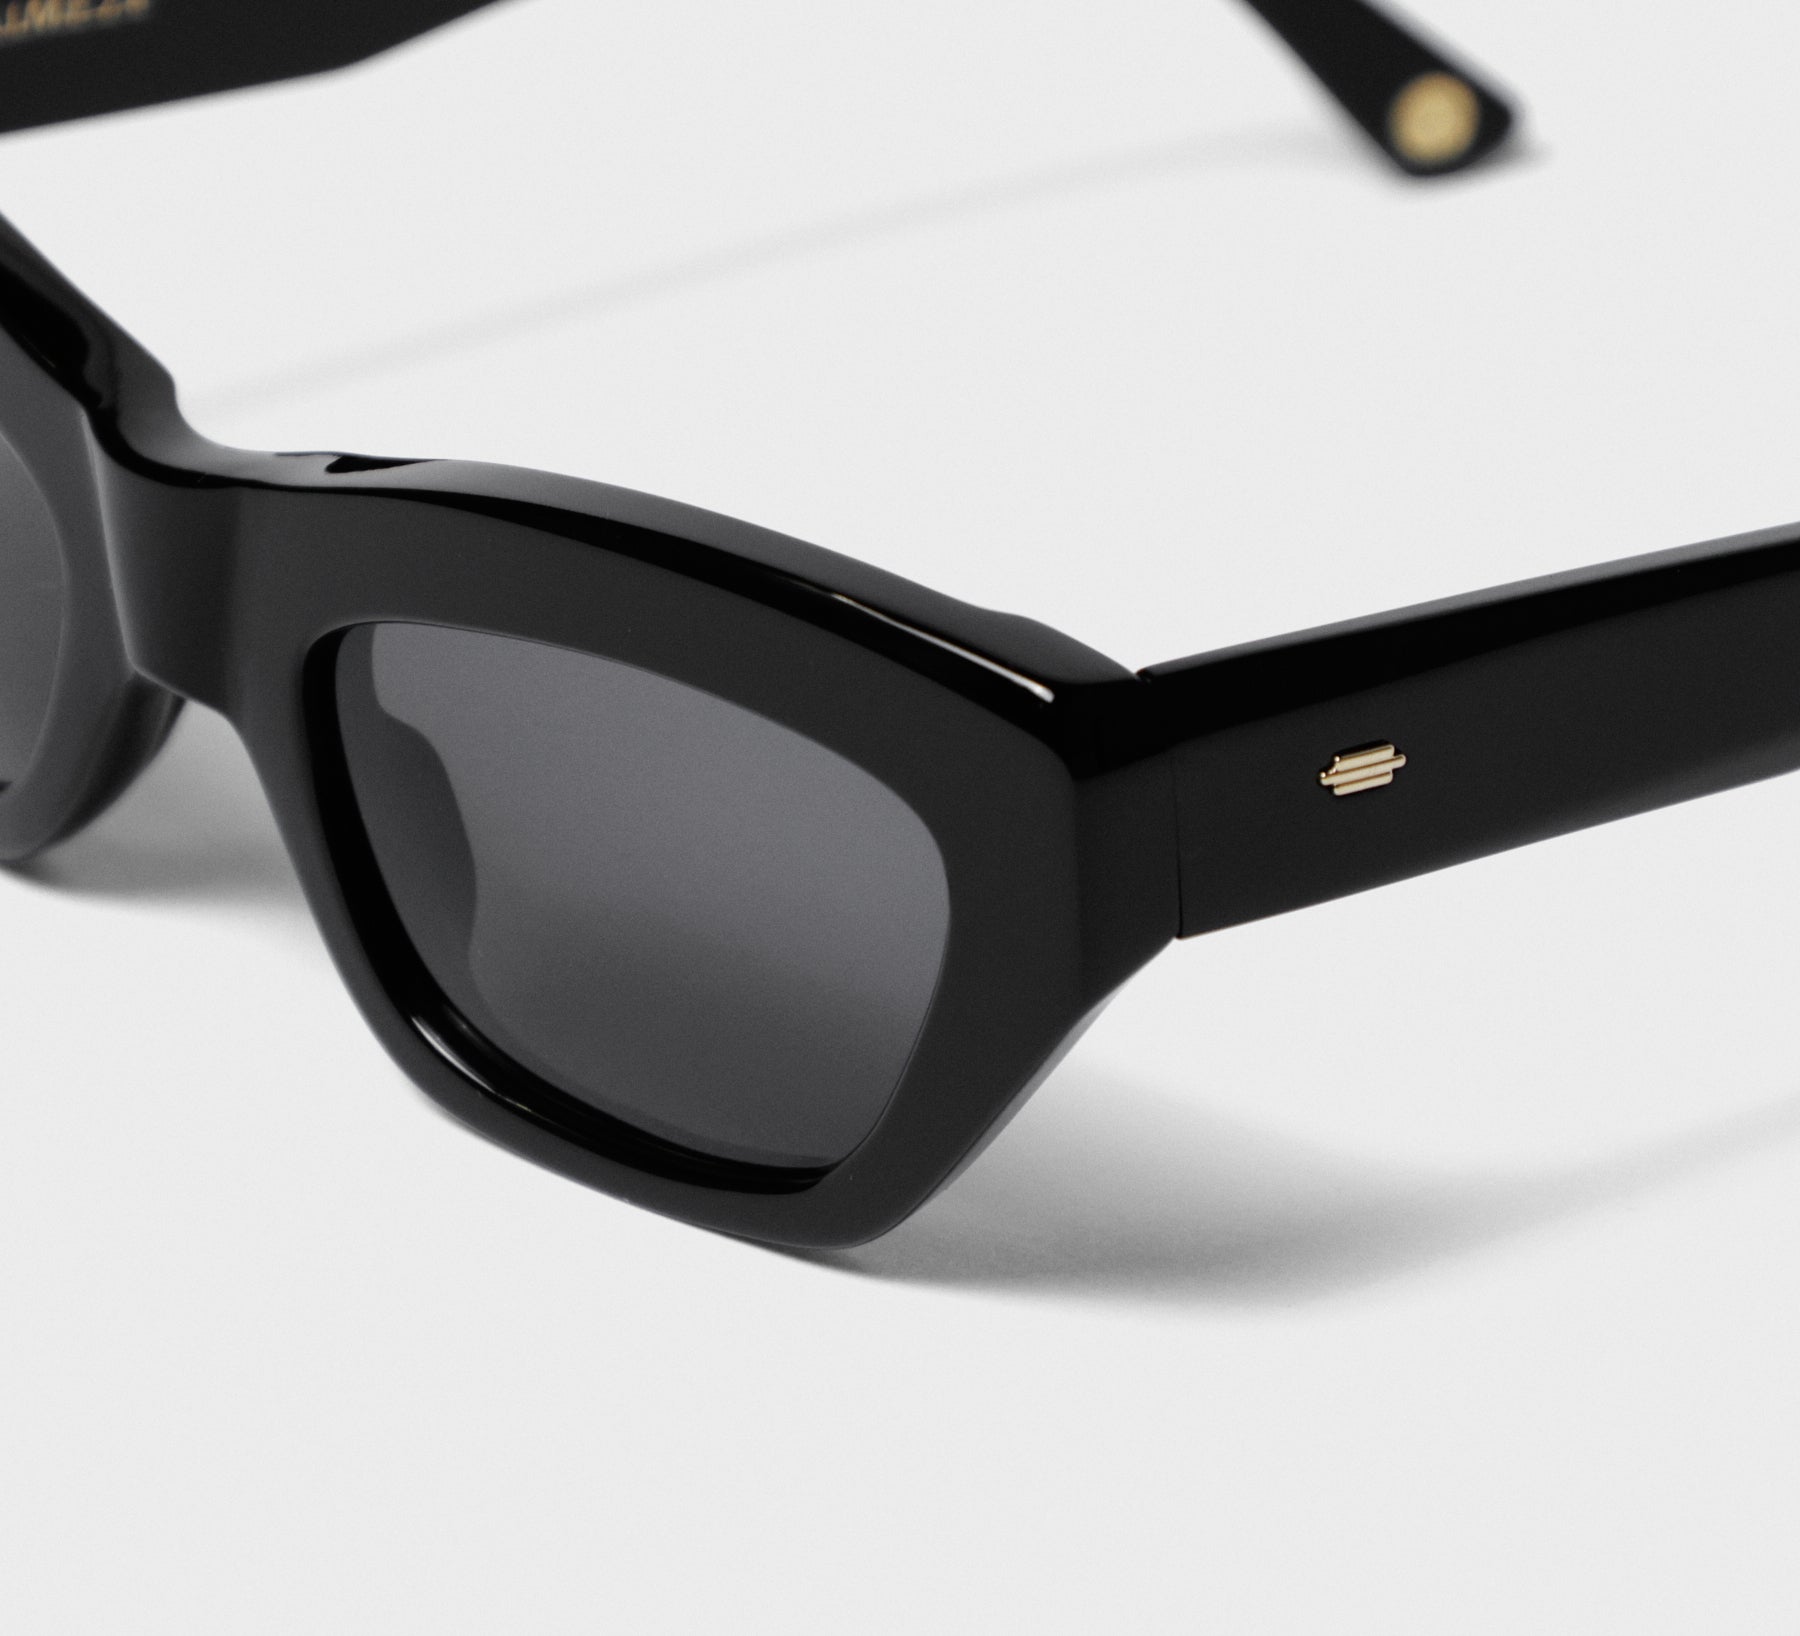 KIMEZE Concept 3 Black Sunglasses